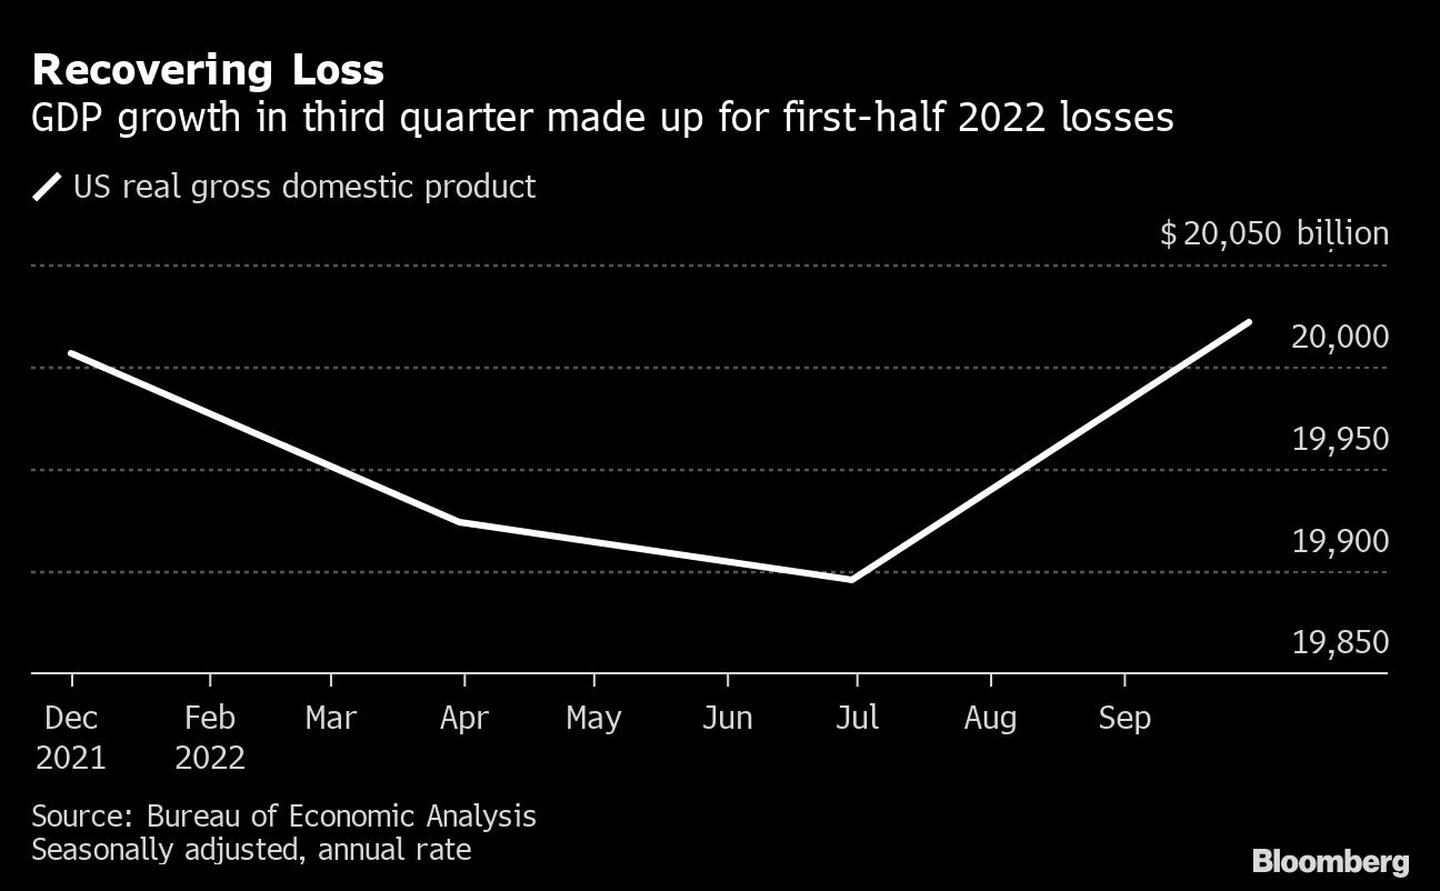 El crecimiento del PIB en el tercer trimestre compensó las pérdidas del primer semestre de 2022dfd